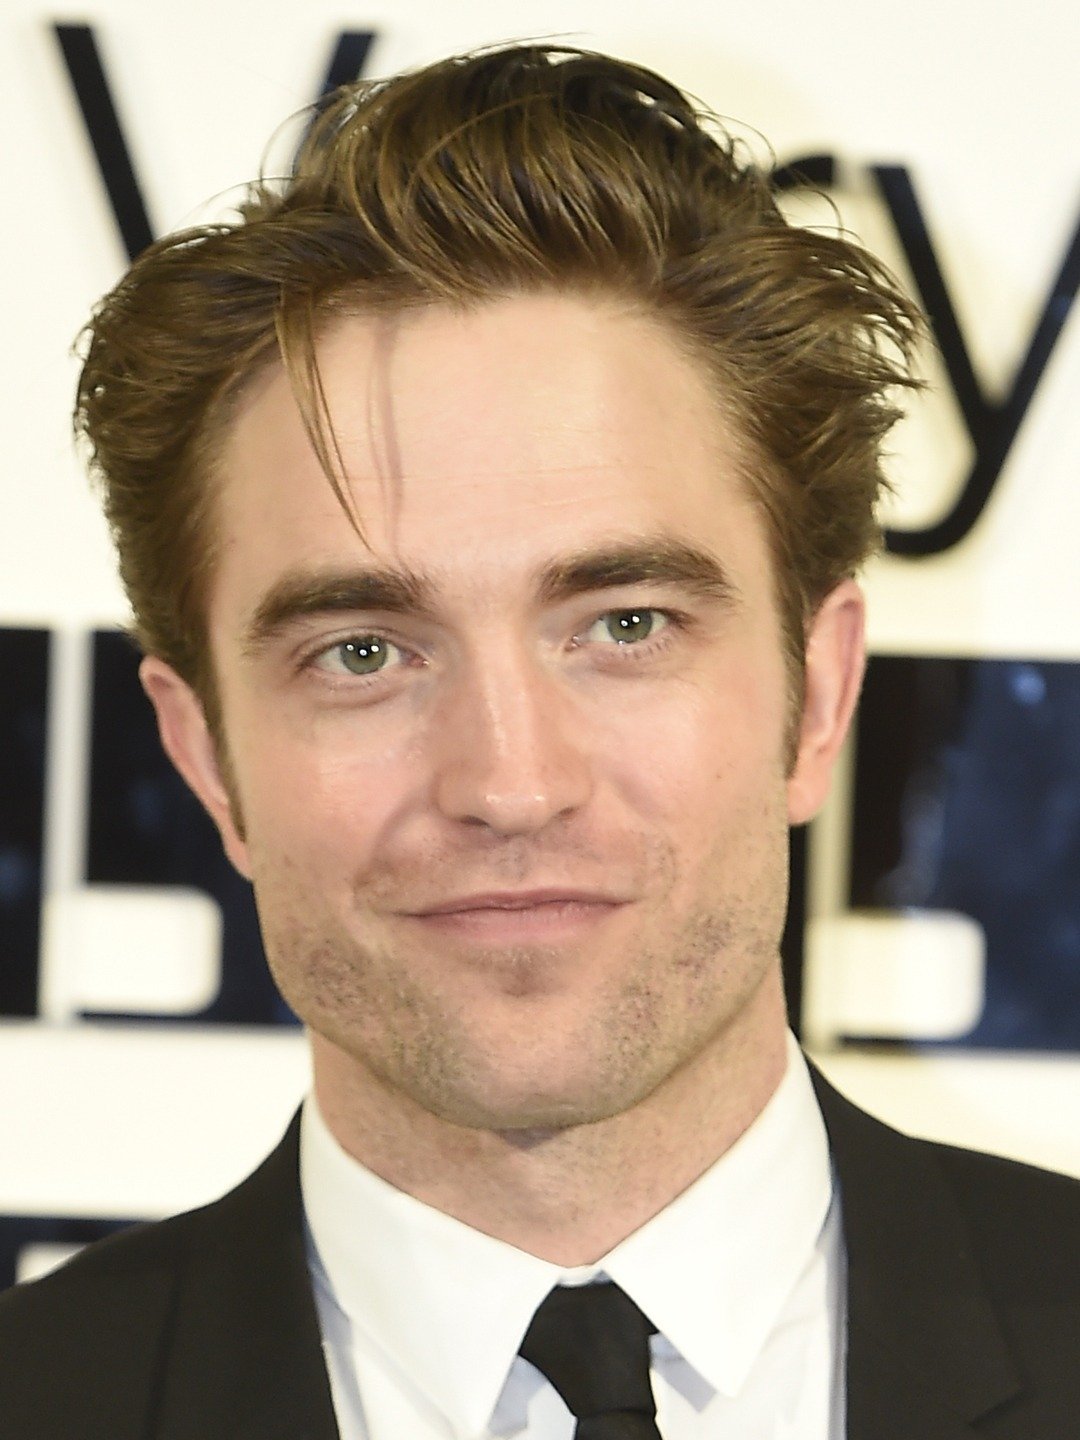 Robert Pattinson - Wikipedia